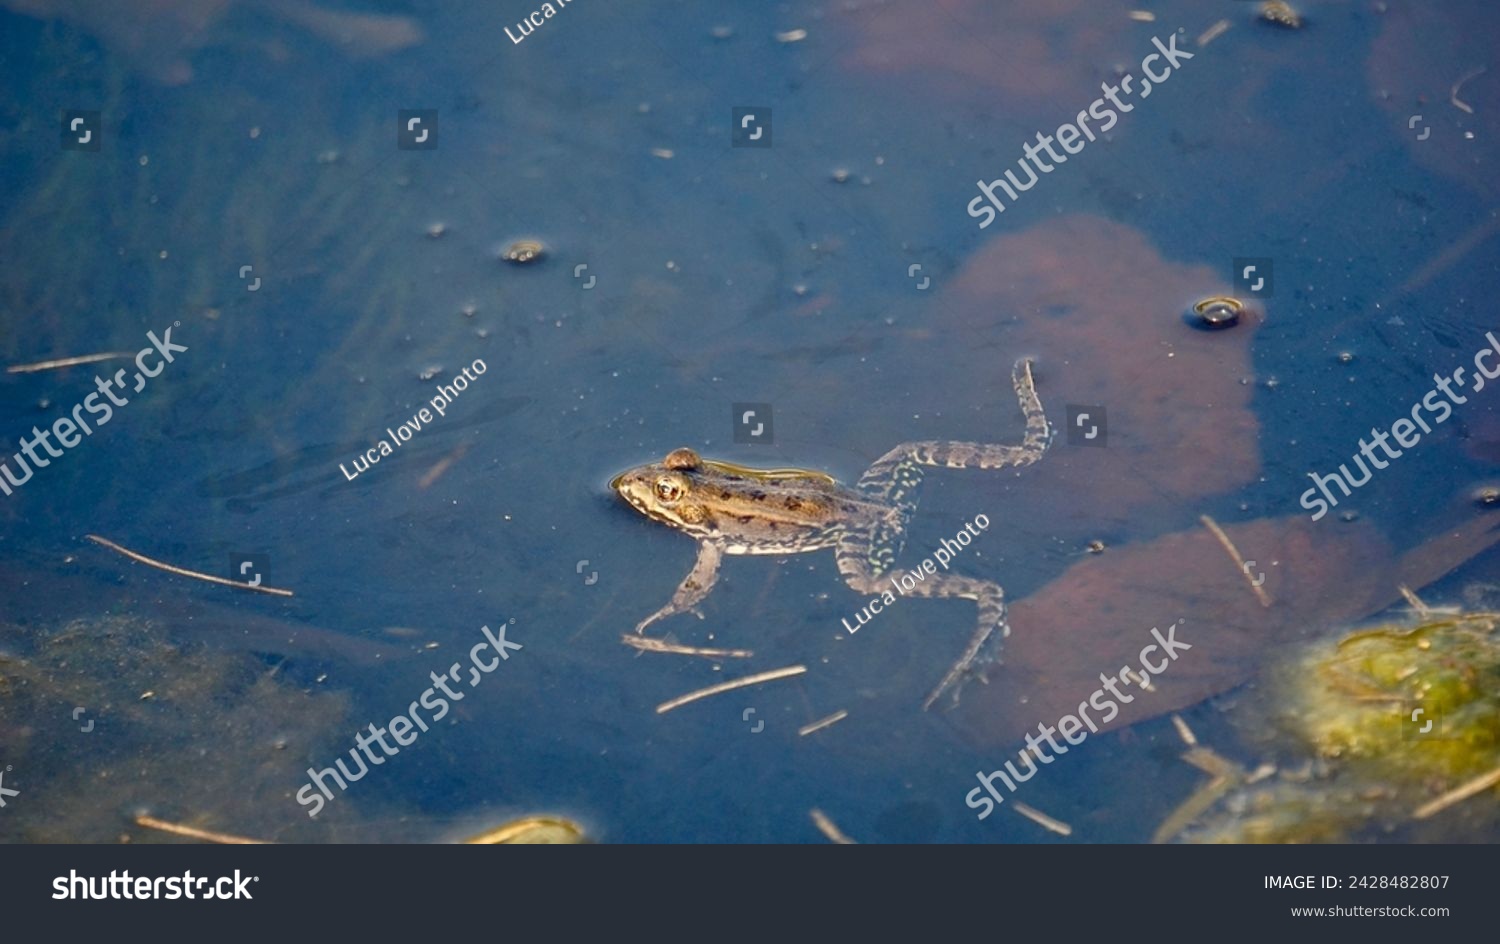 Ecology and behavior of Pelophylax ridibundus: The Marsh frog, at the pond. Winter season      #2428482807